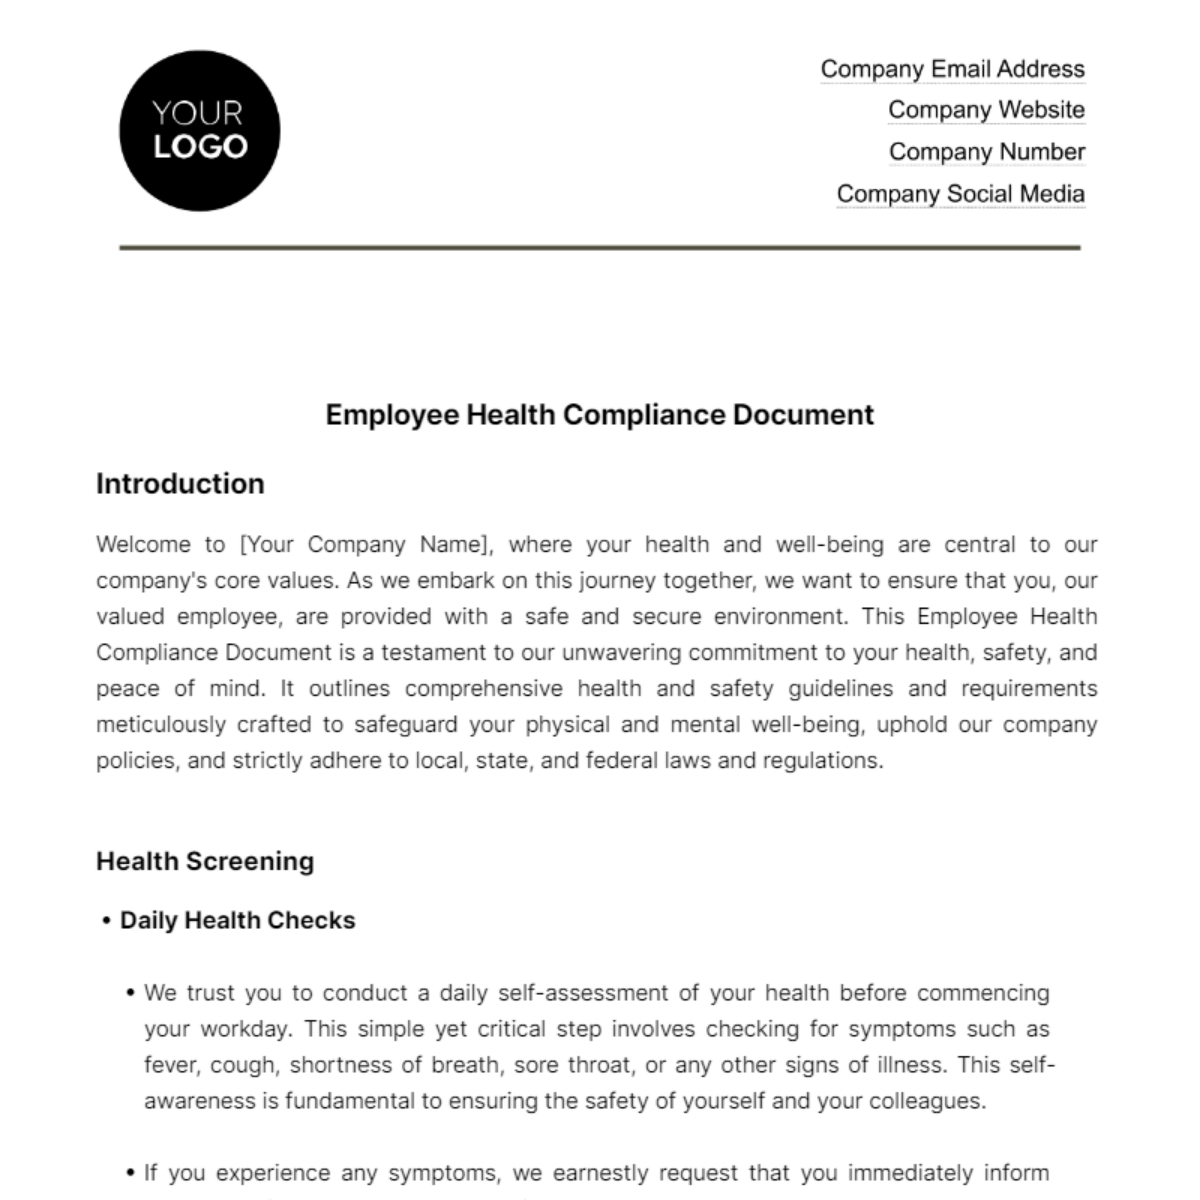 Employee Health Compliance Document HR Template